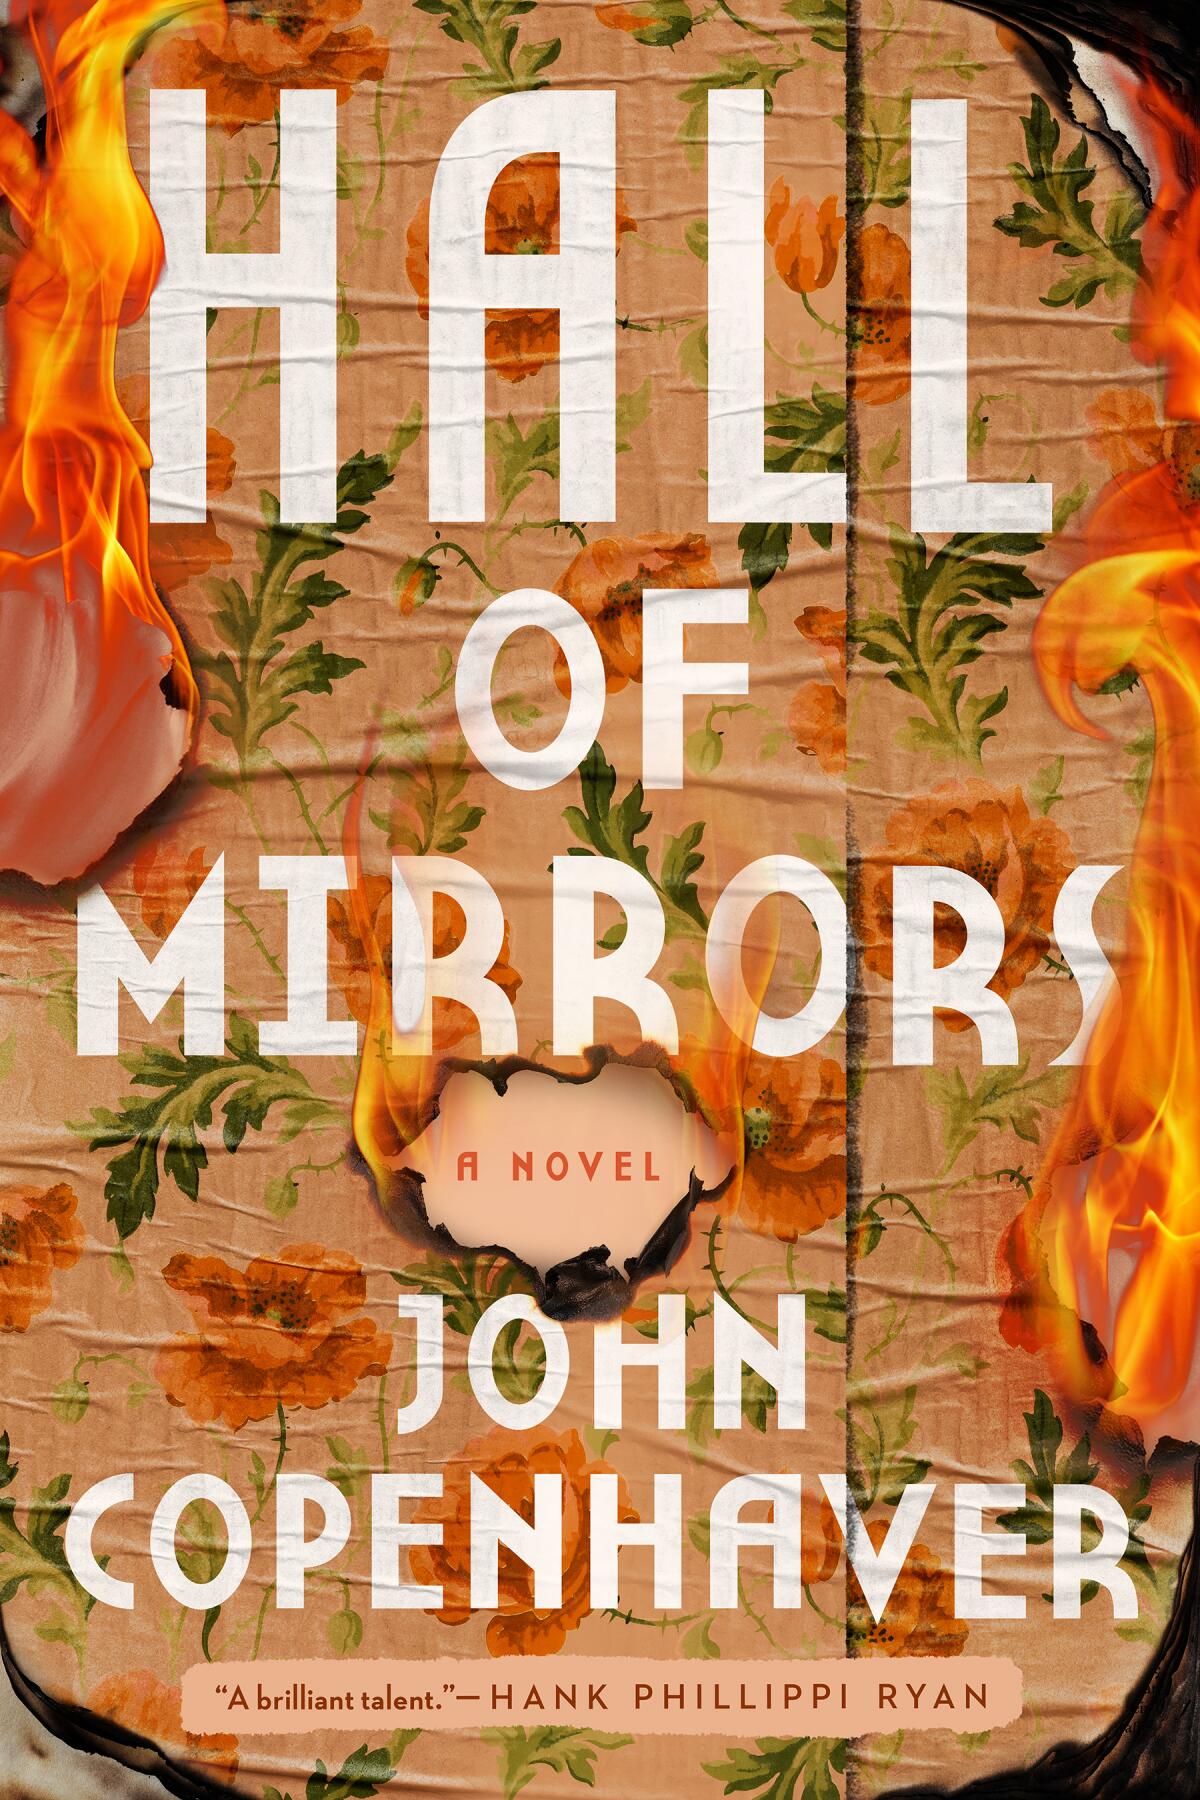 "Hall of Mirrors" by John Copenhaver